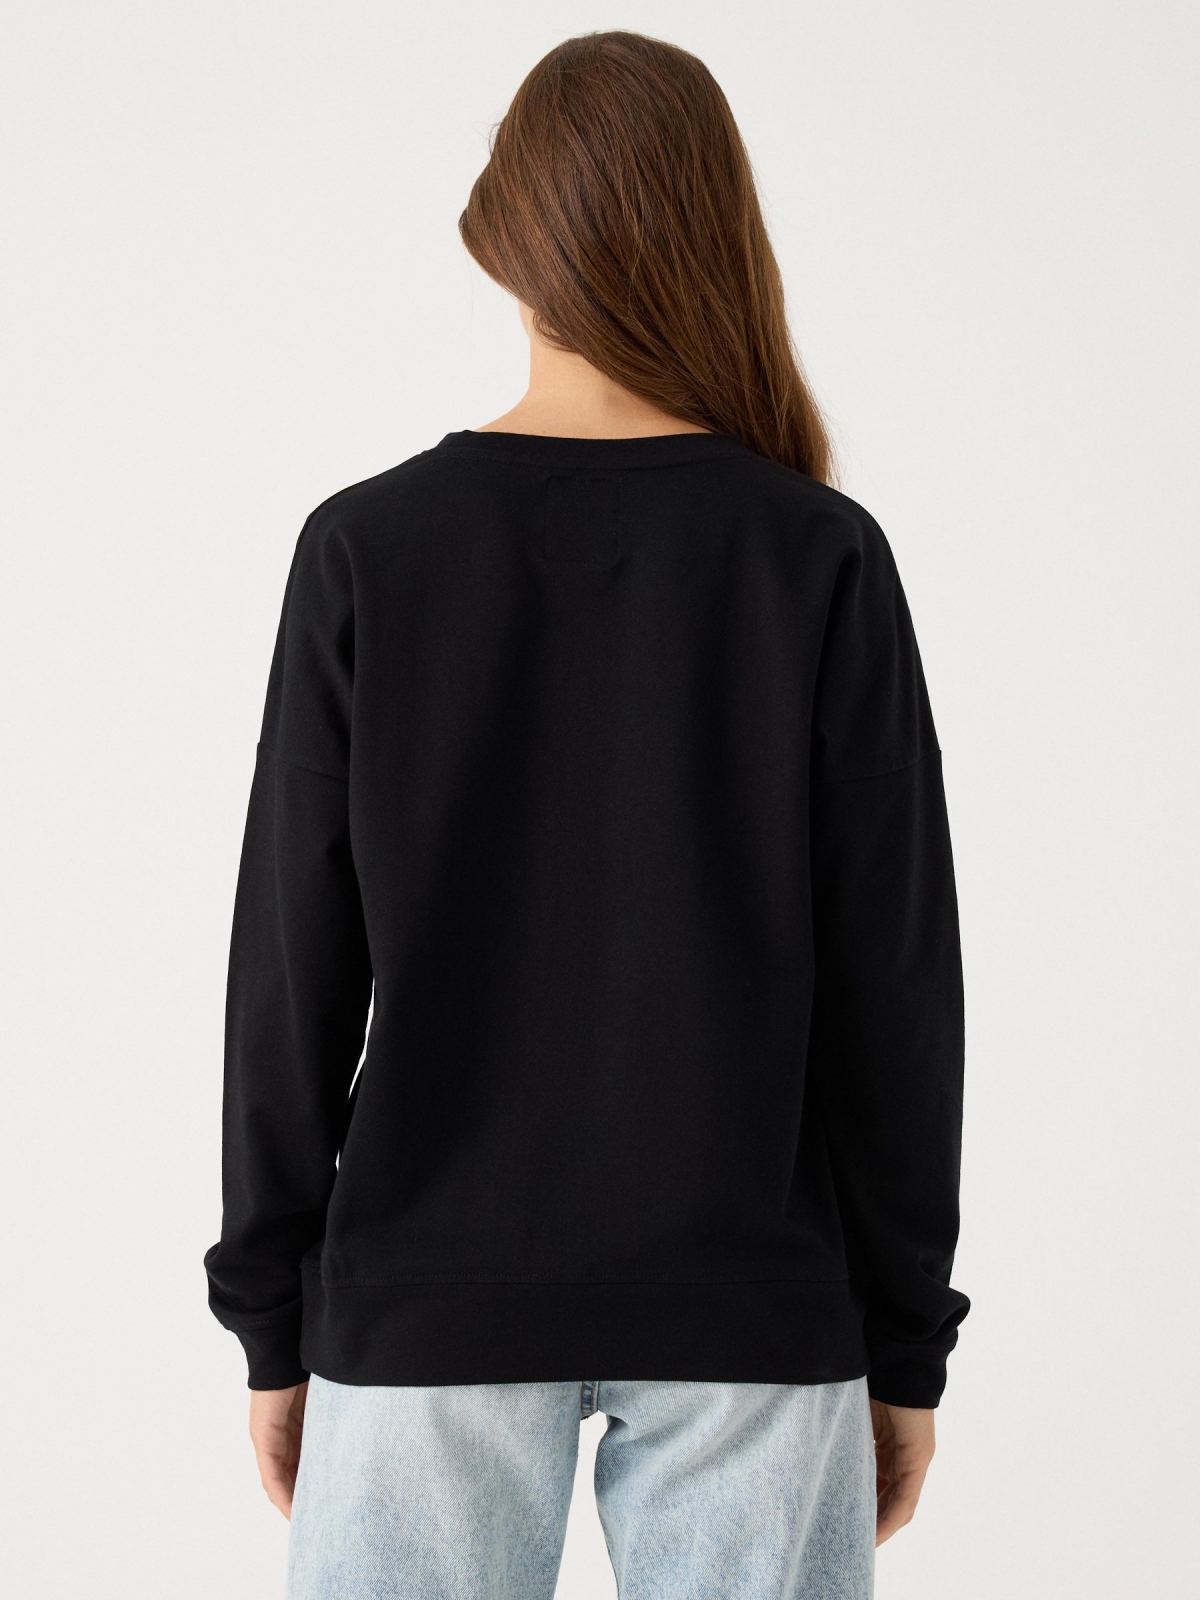 Basic sweatshirt black middle back view